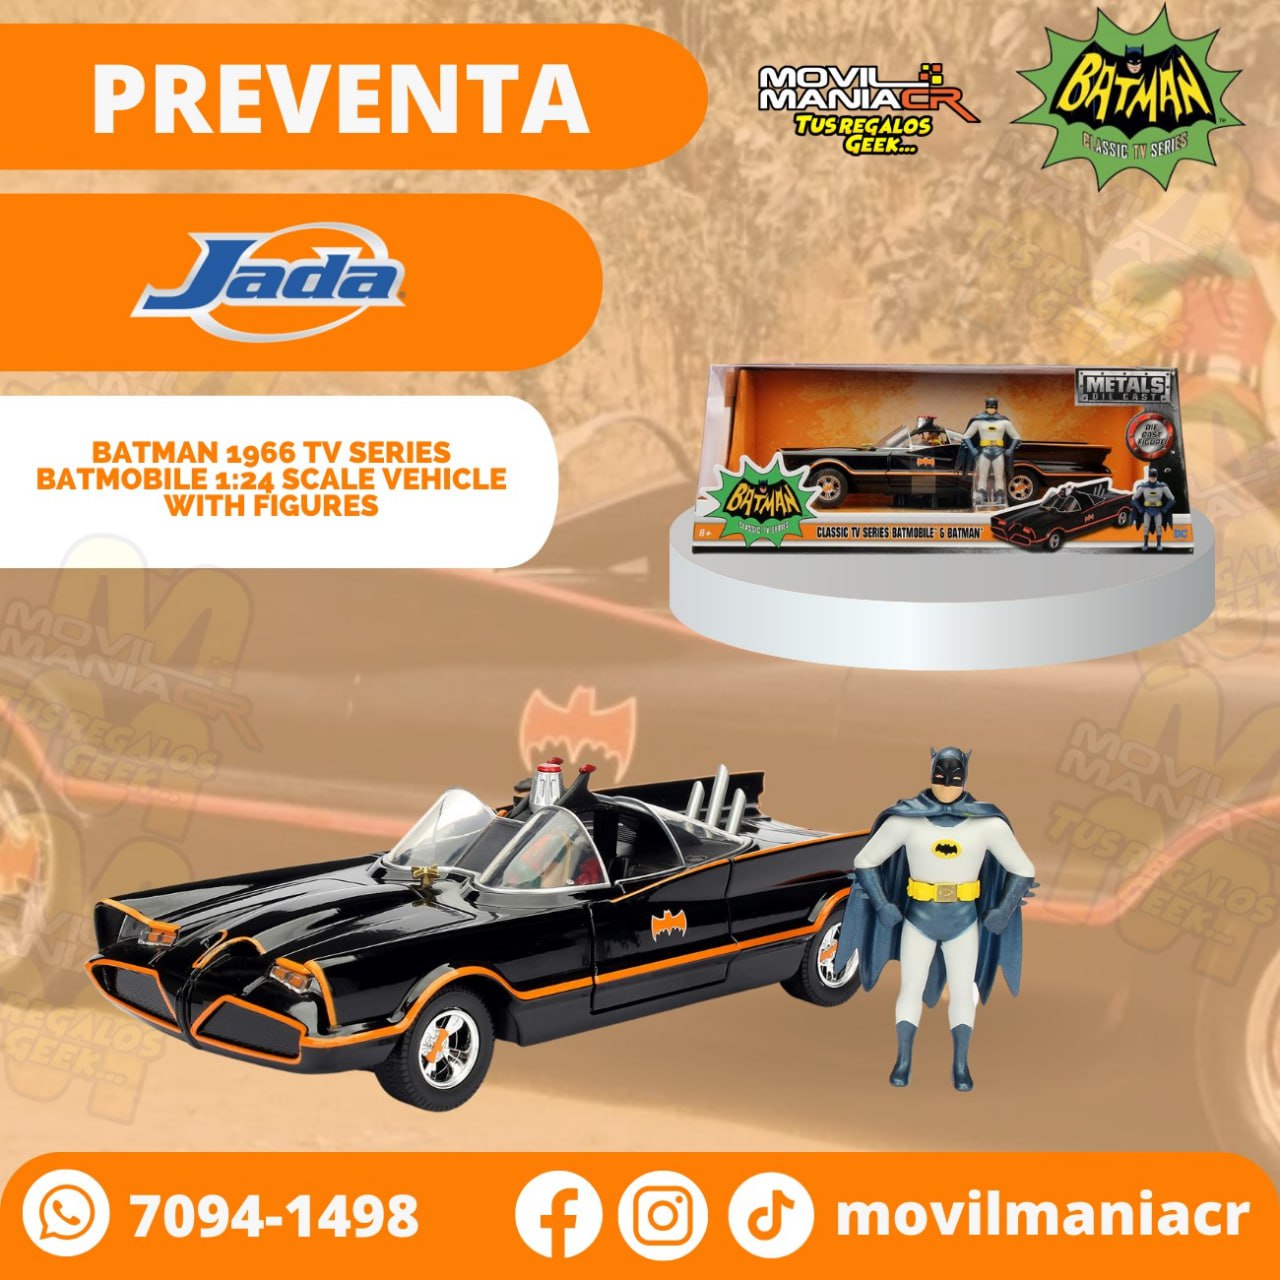 Preventa Carro Jada Toys Batman 1966 TV Series Batmobile Escala 124